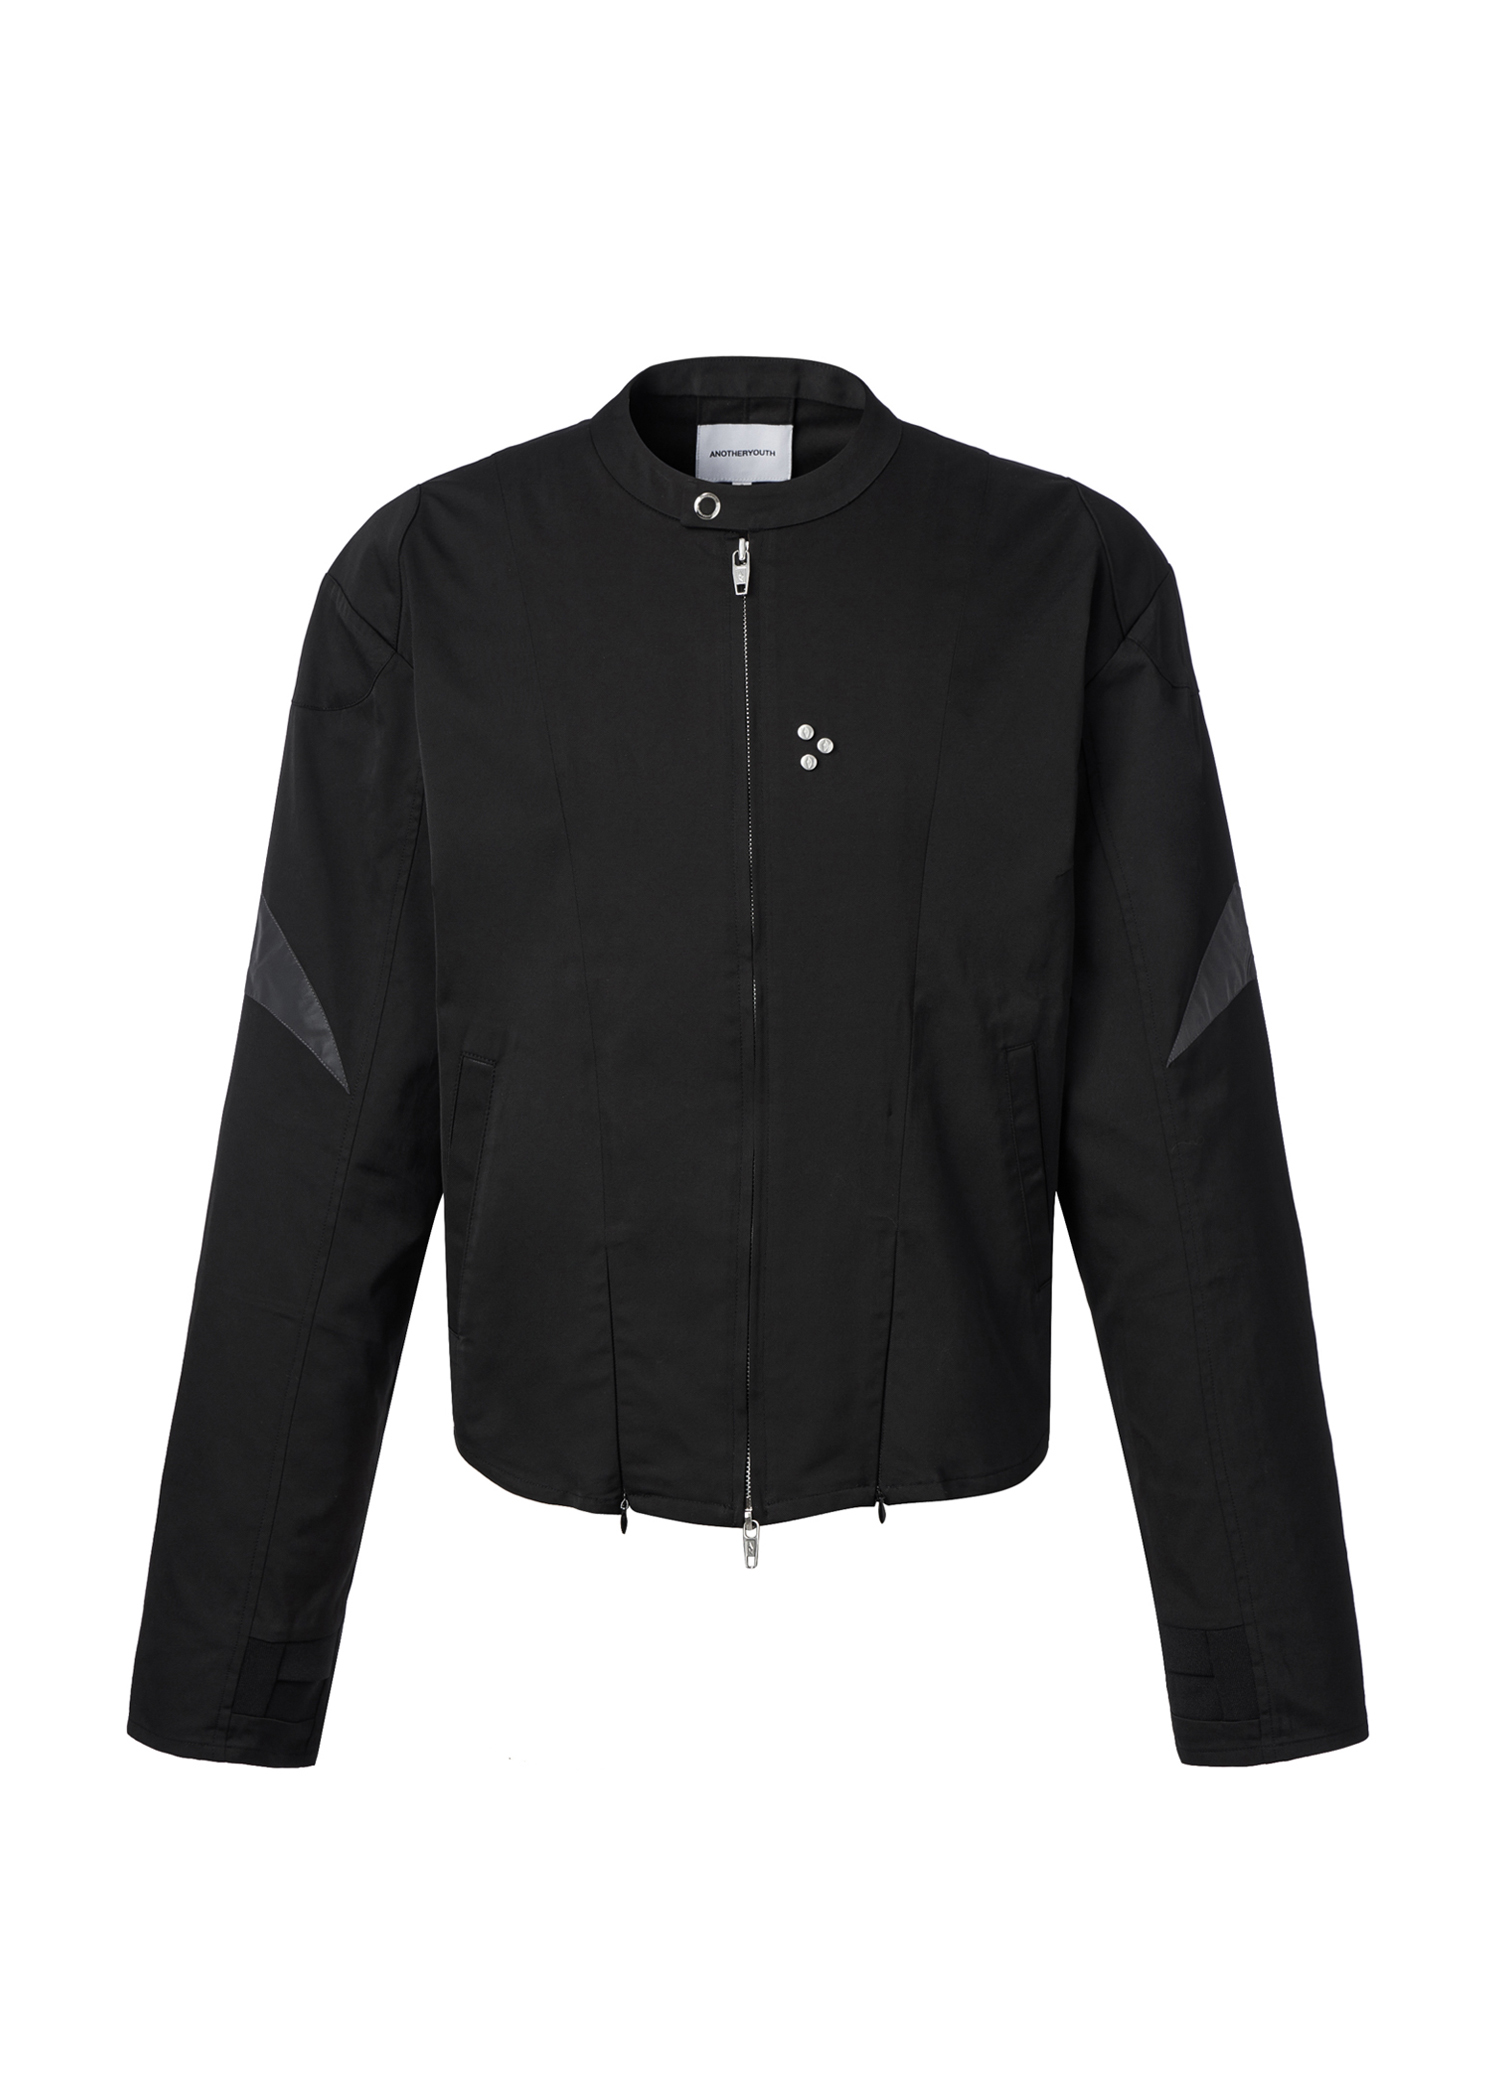 003-23 PC warmer jacket - black